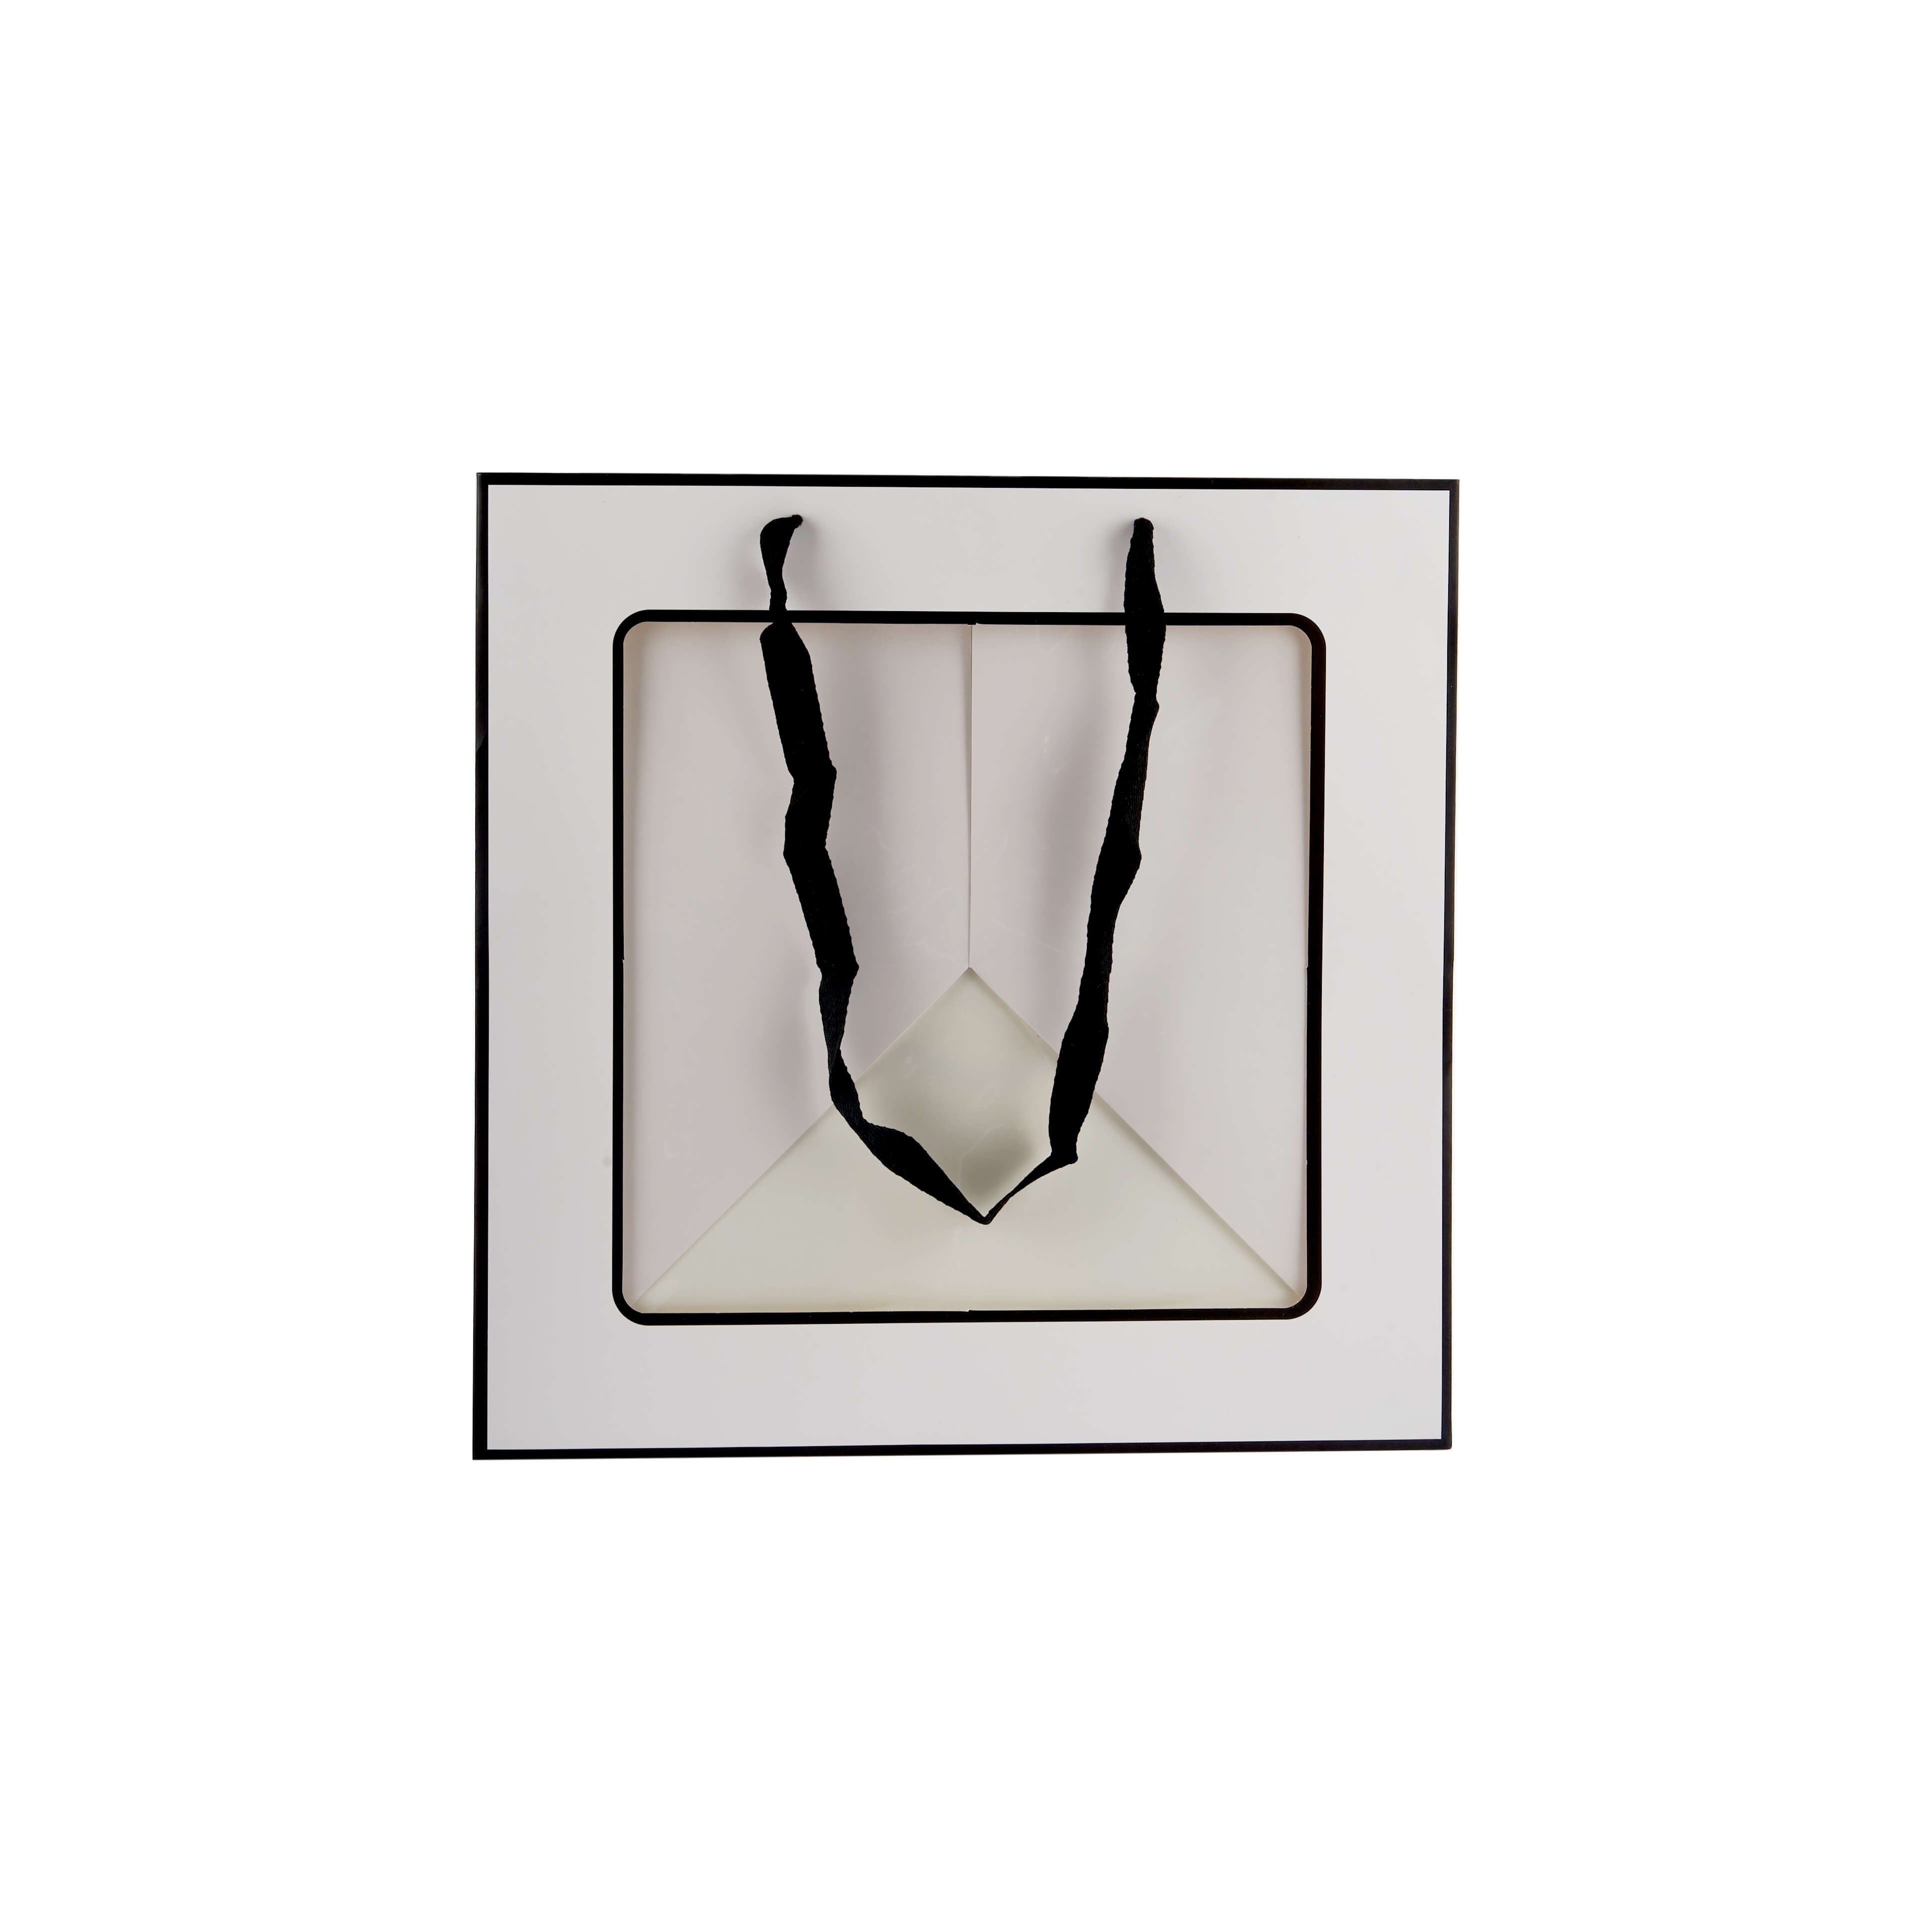 Luxury Gift Paper Bag With Window - hotpackwebstore.com